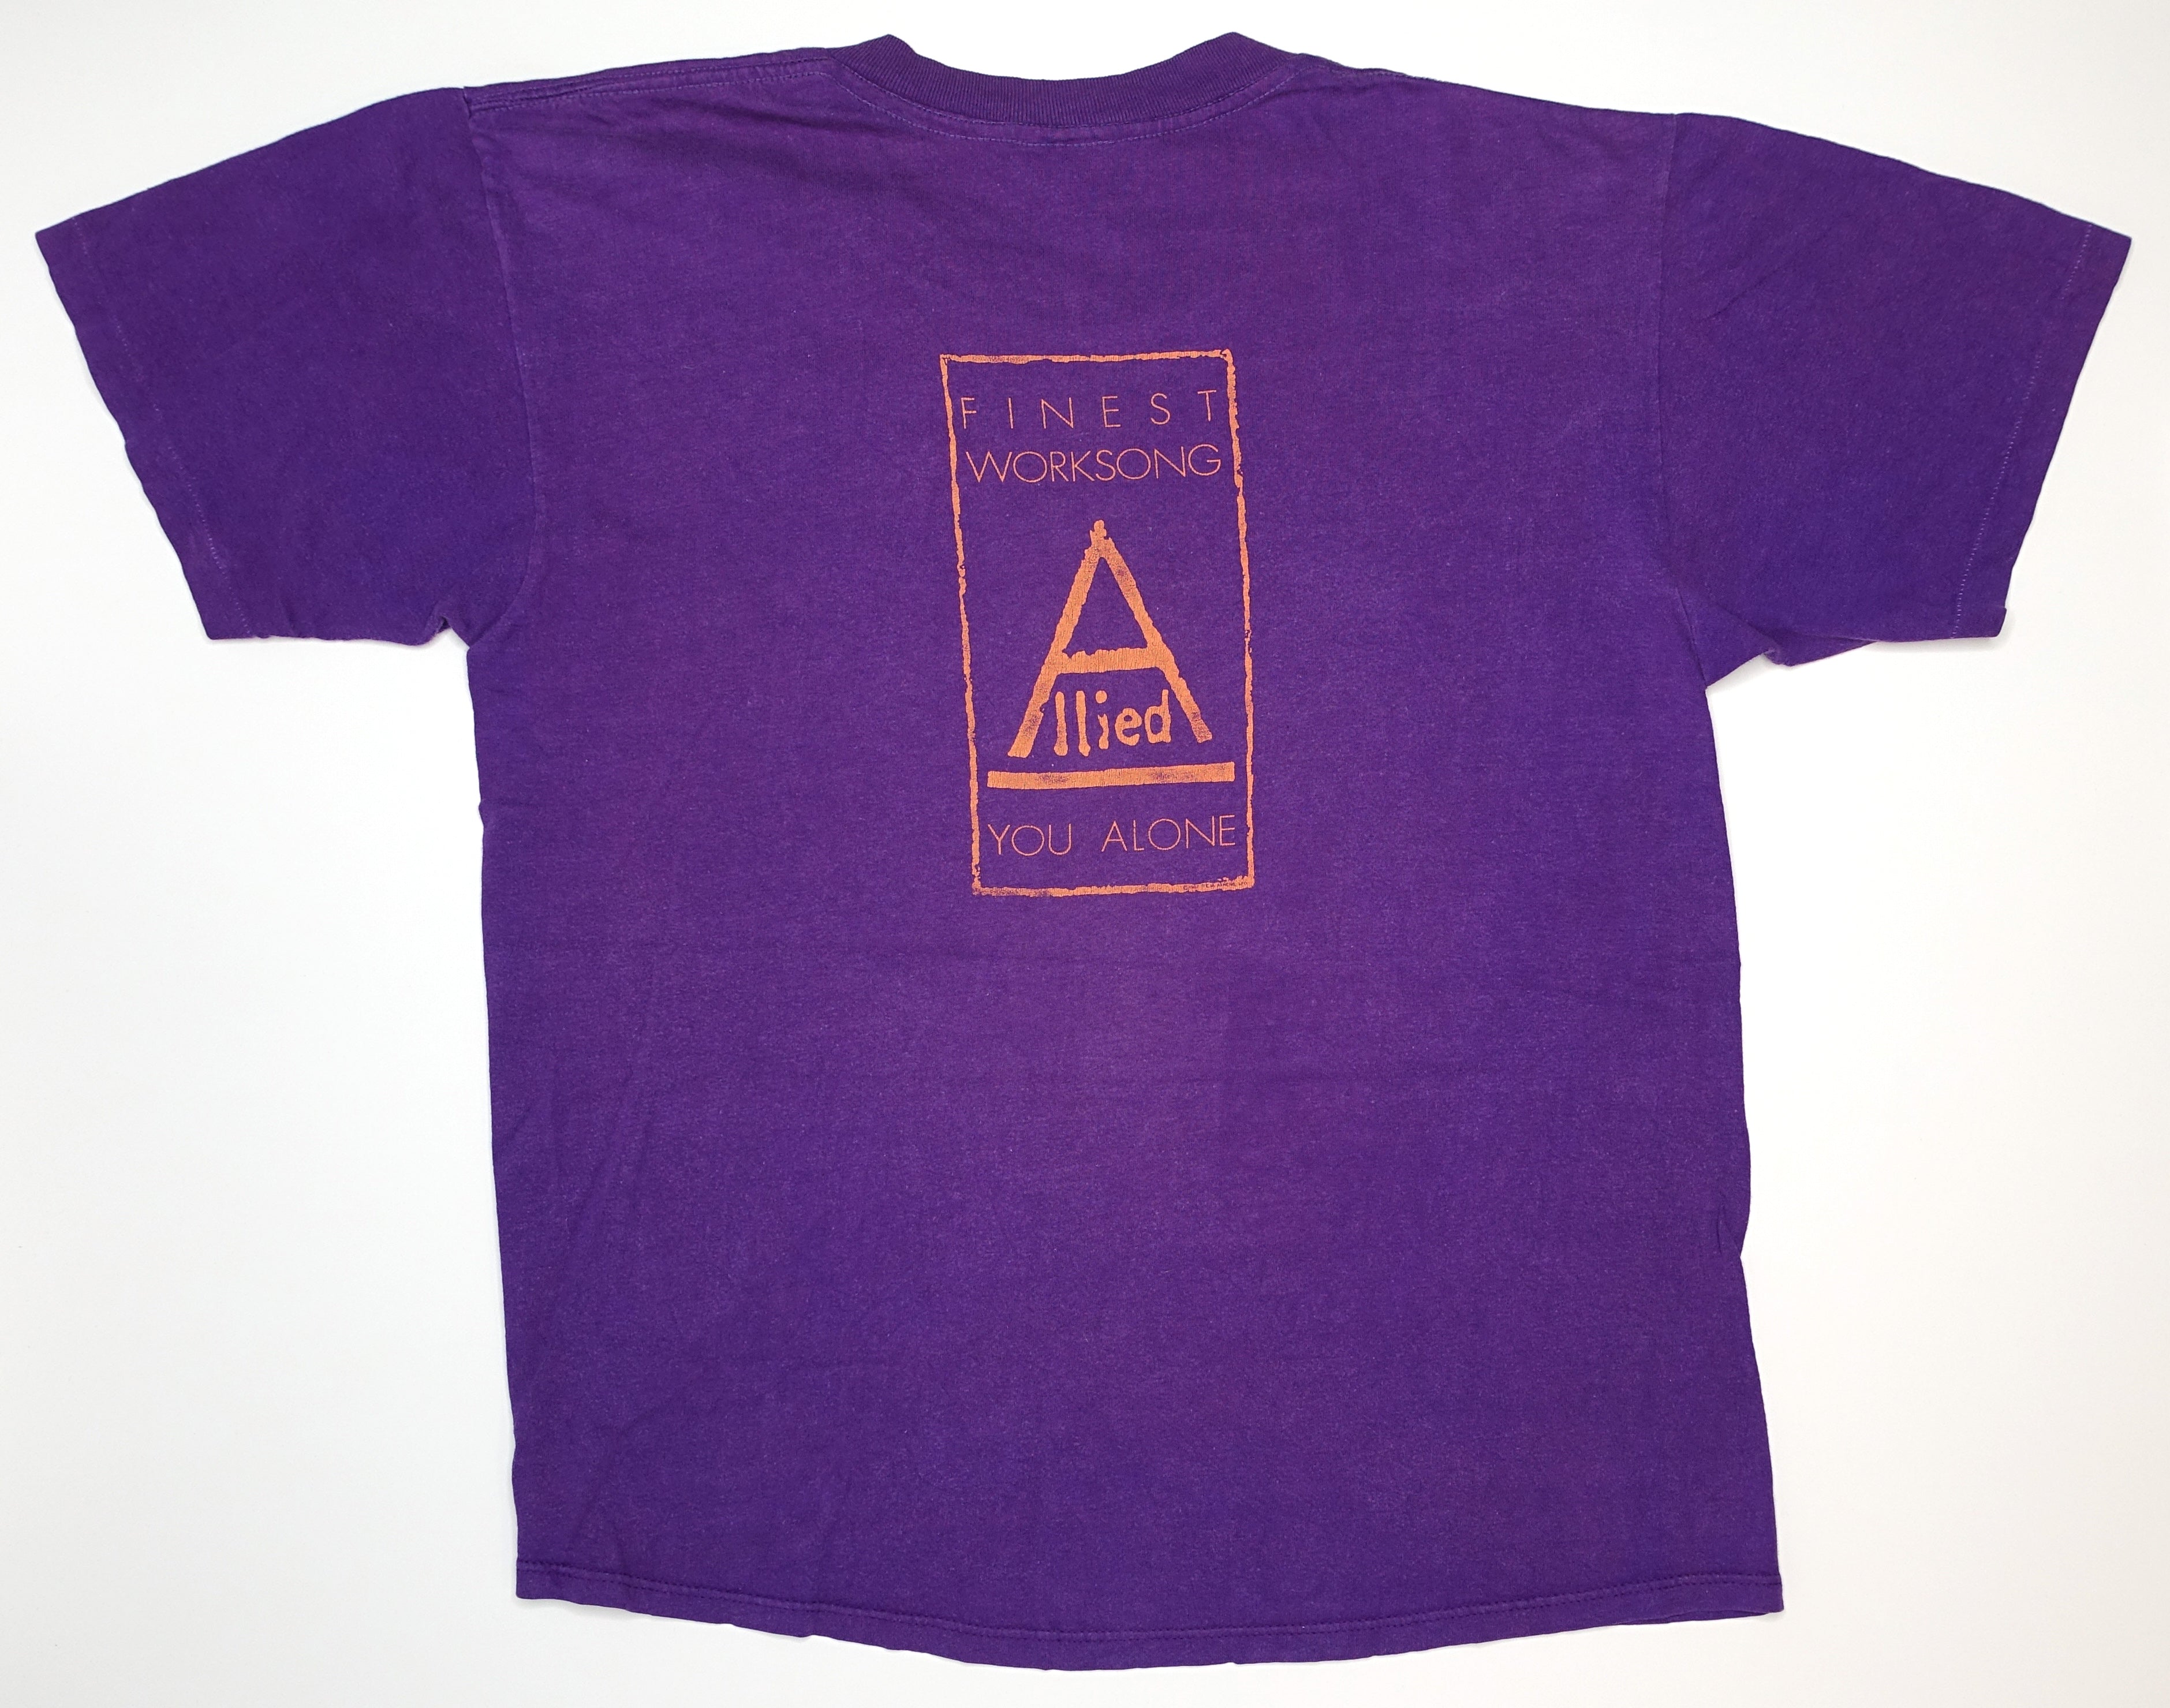 R.E.M. ‎– Allied Finest Worksong Document 1987 Tour Shirt Size XL